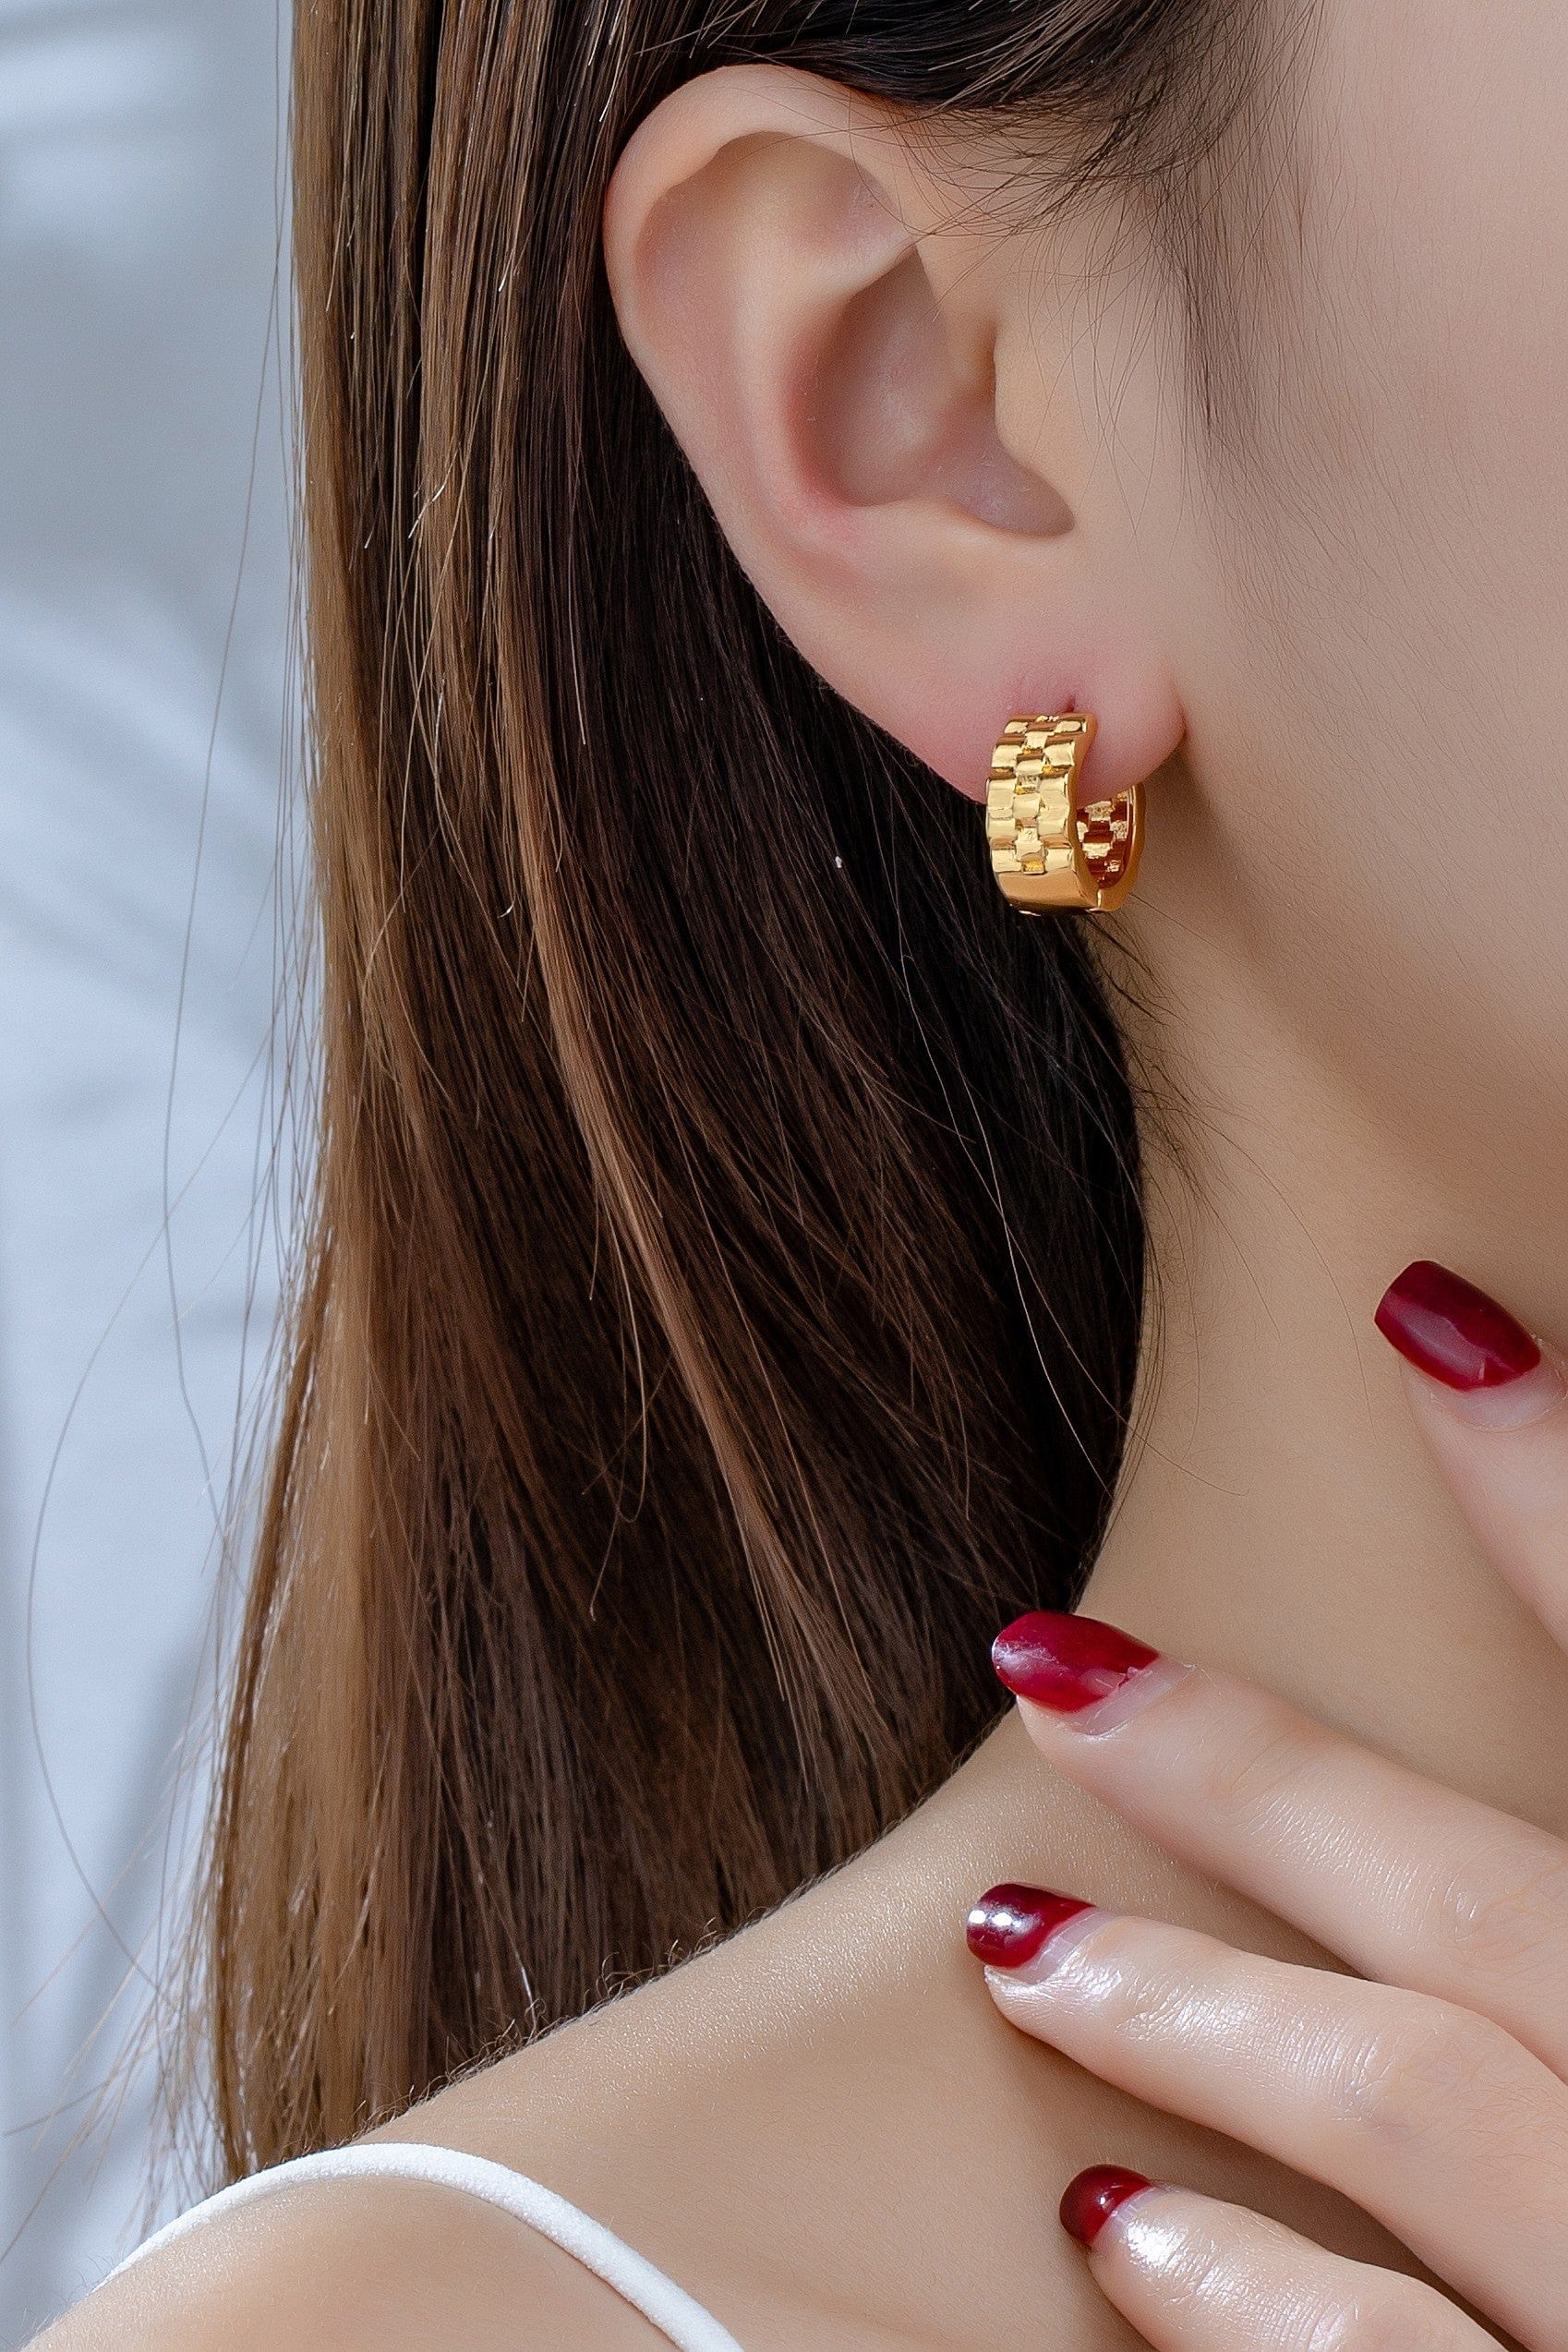 LA3accessories Jewelry - Earrings Water Proof Stainless Watch Band Huggie Earrings In Gold 06512374